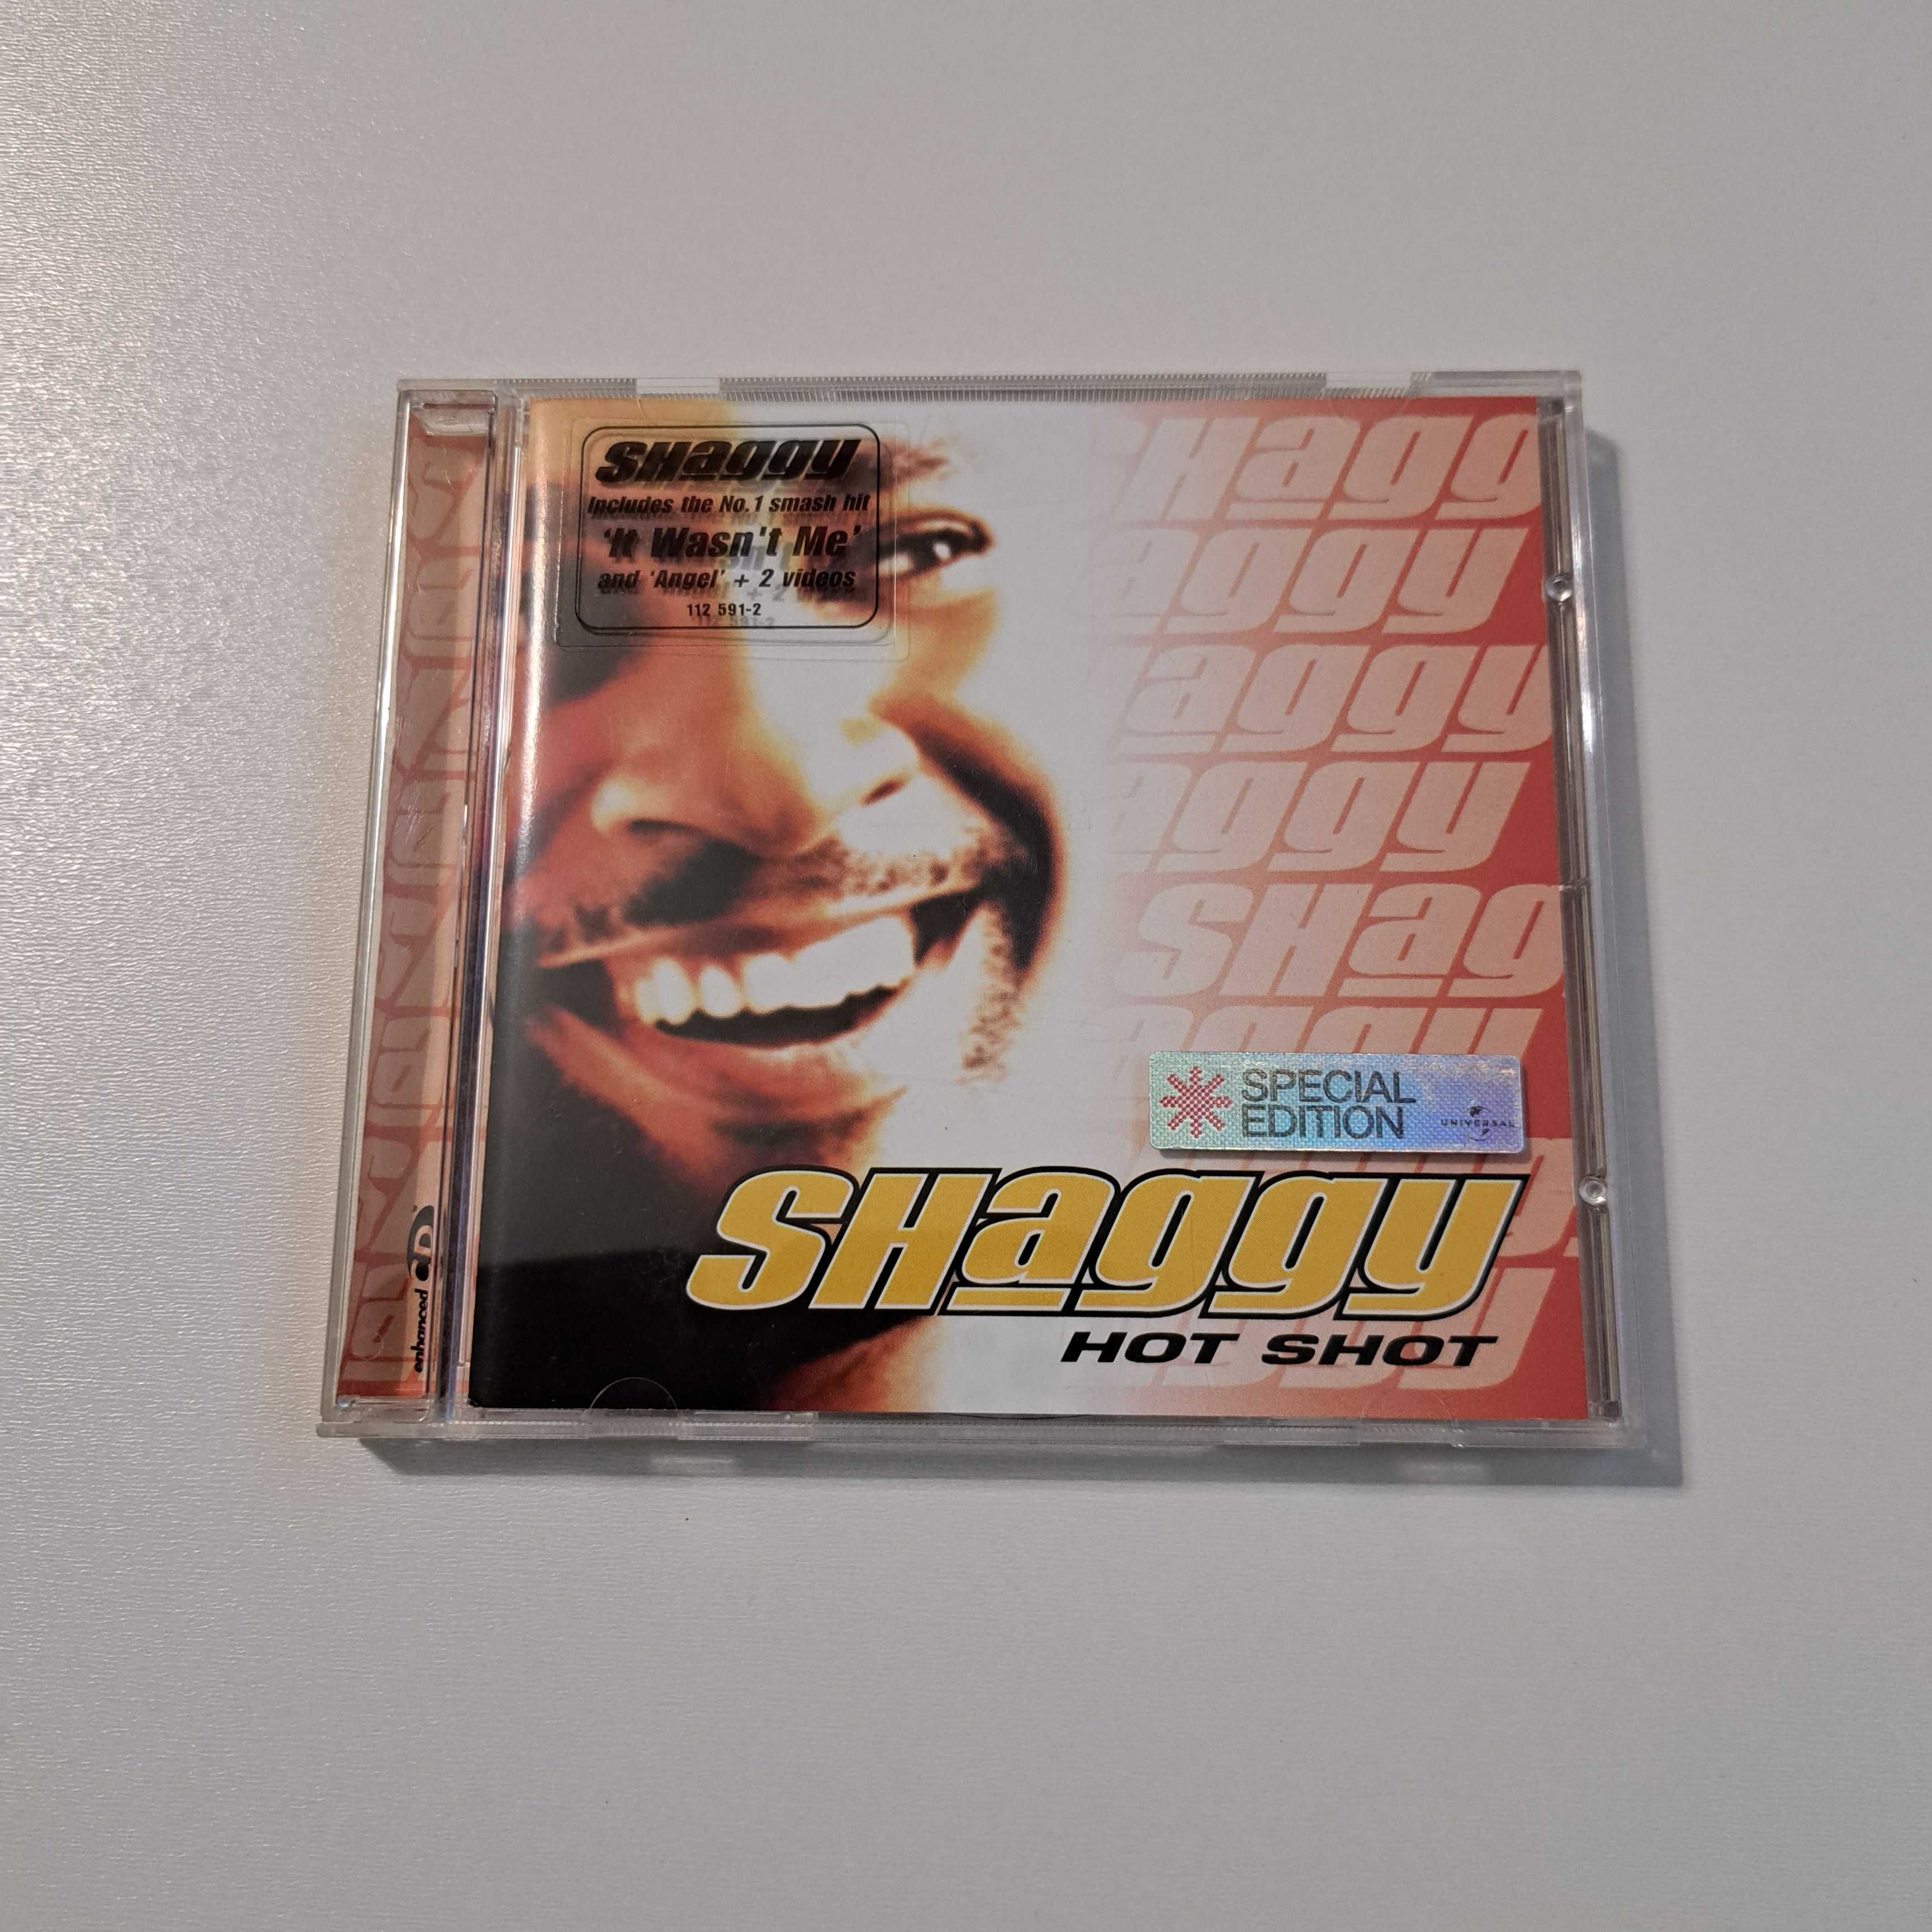 Płyta CD  Shaggy - Hot Shot   nr459